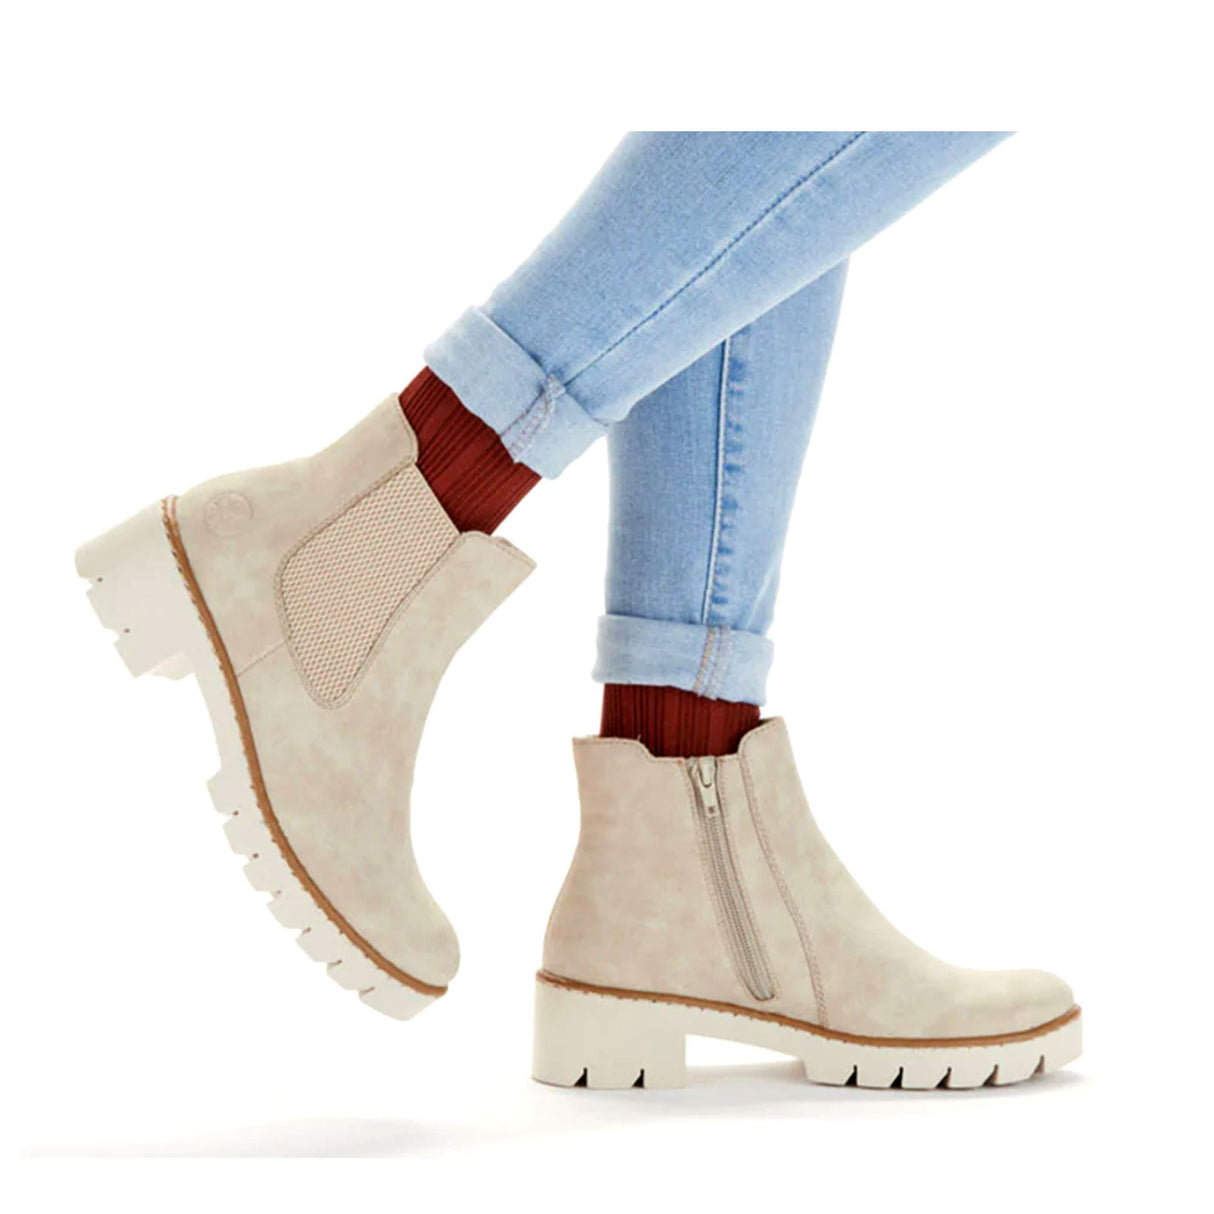 Rieker Prisca X5772 Chelsea Boot (Women) - Morelia/Weaving Champignon/Ginger Boots - Fashion - Chelsea - The Heel Shoe Fitters